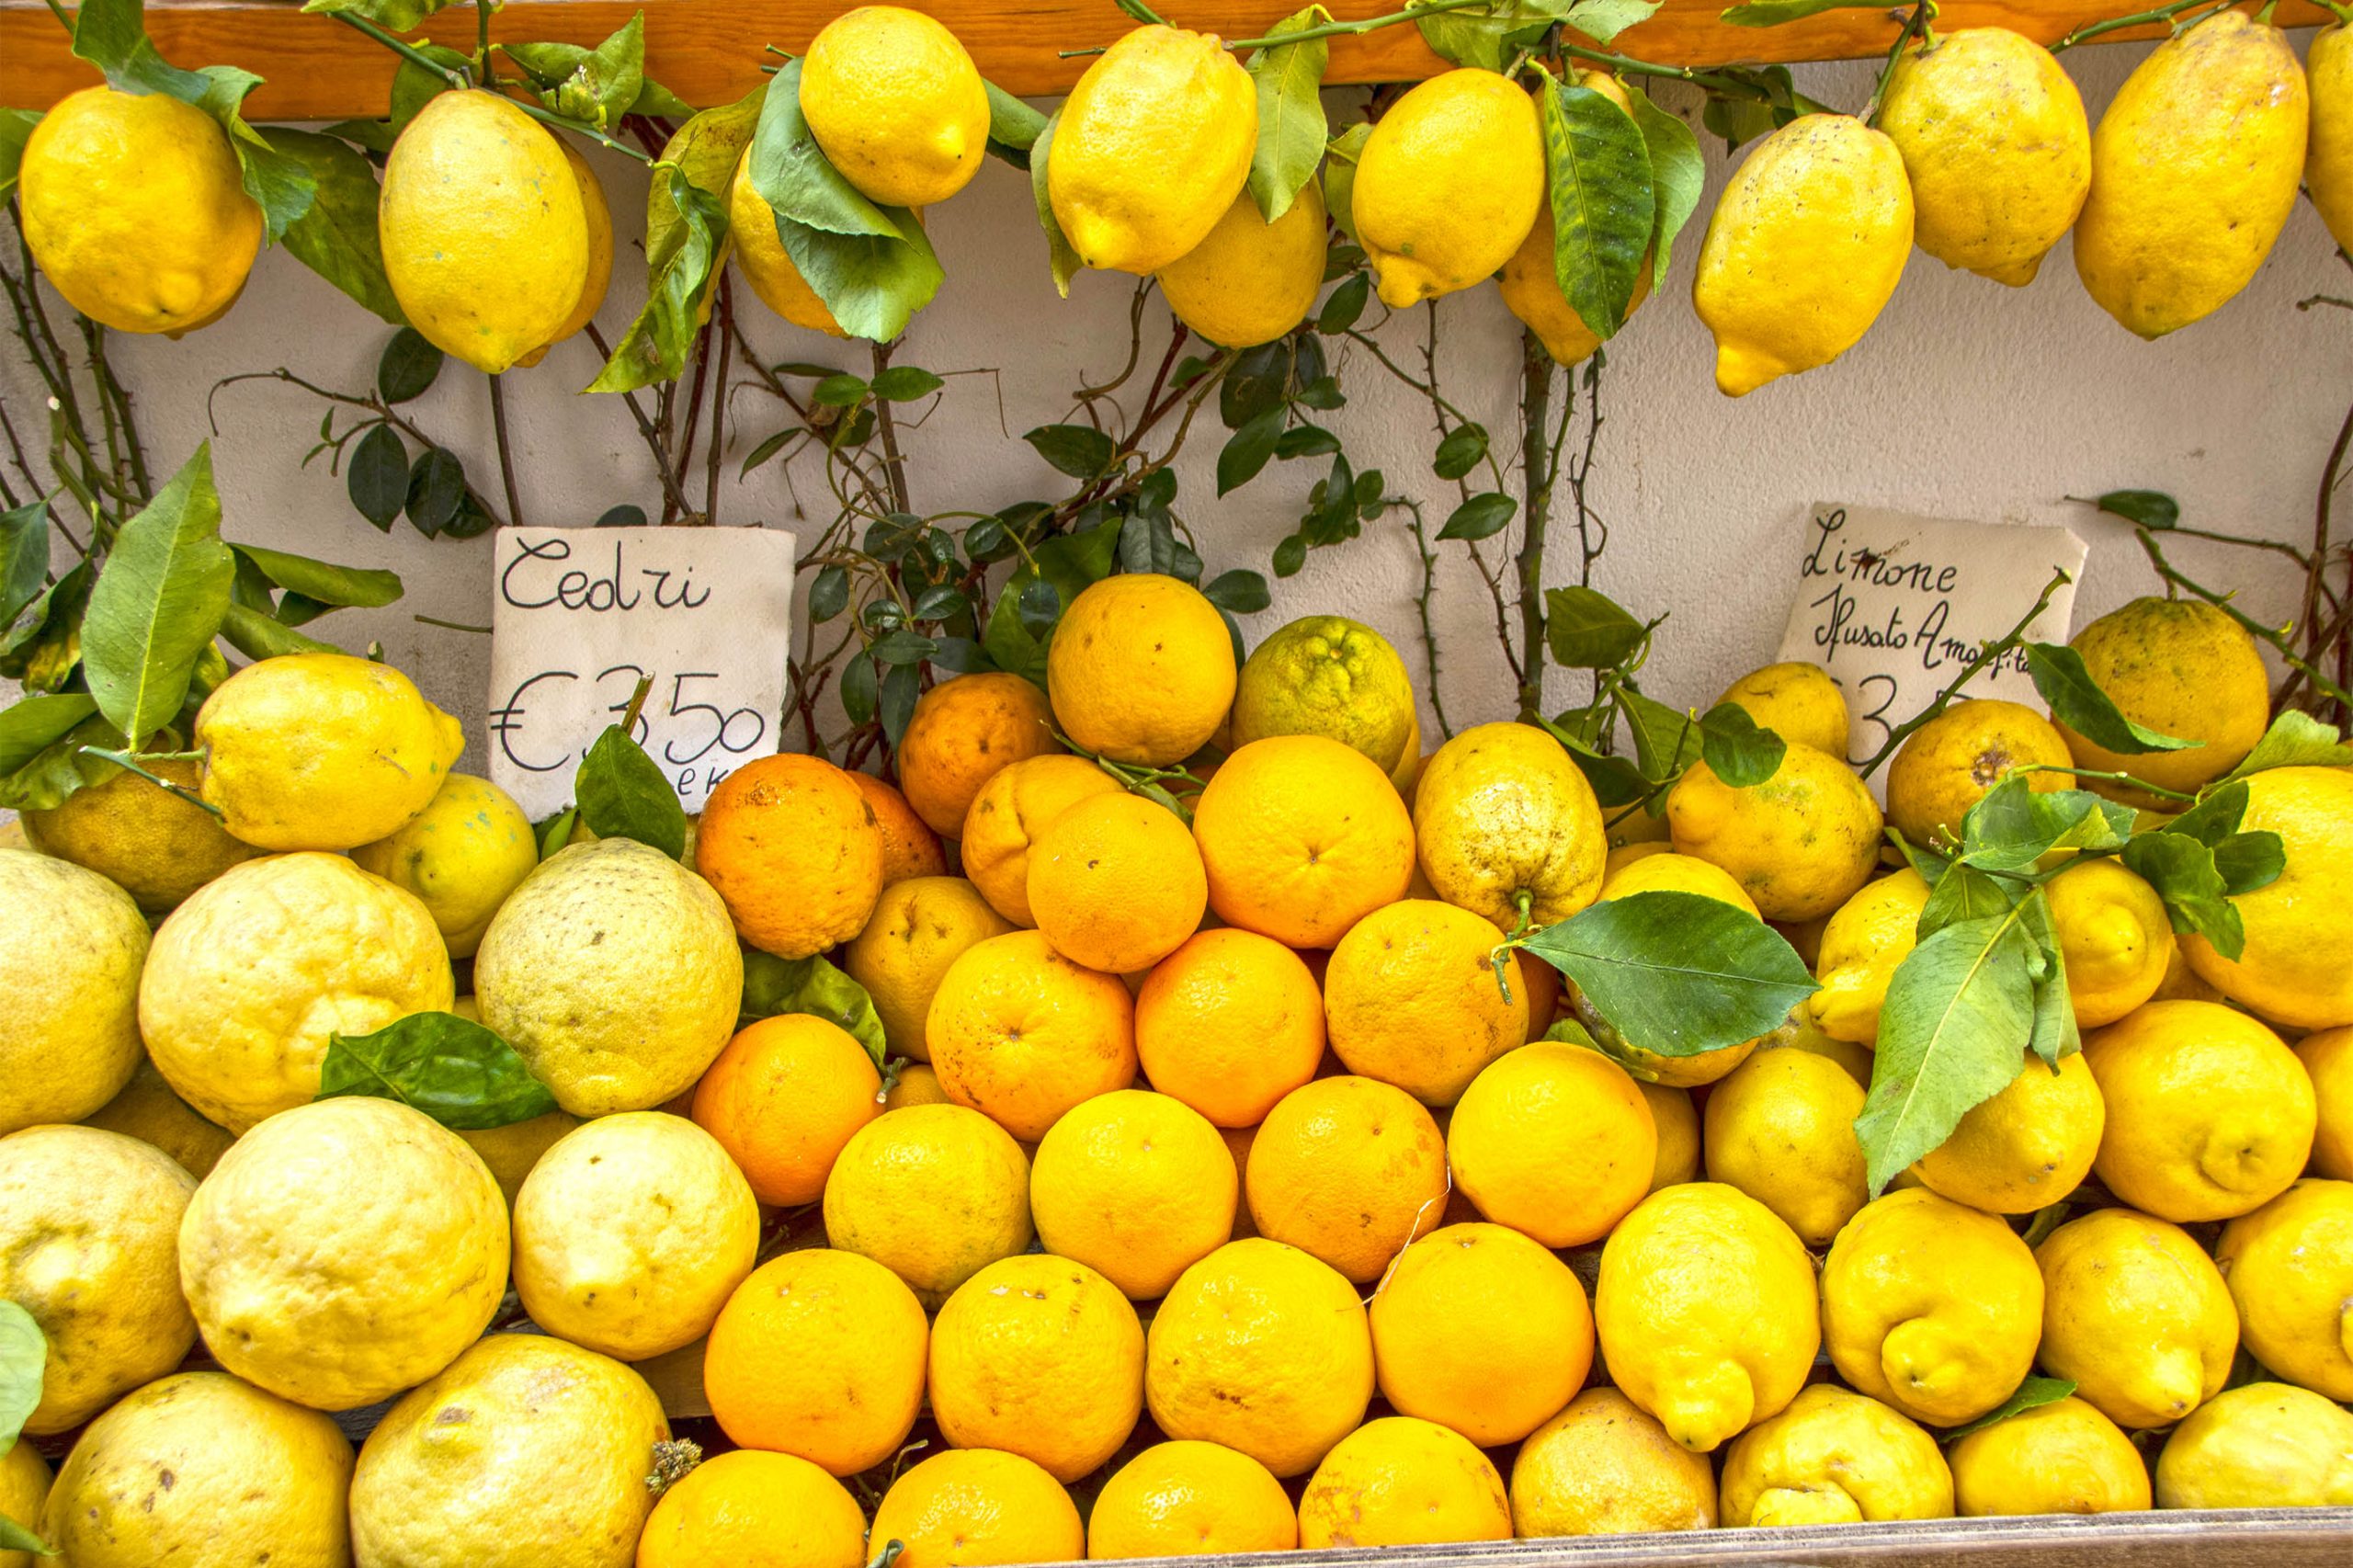 Lemons on a market stall